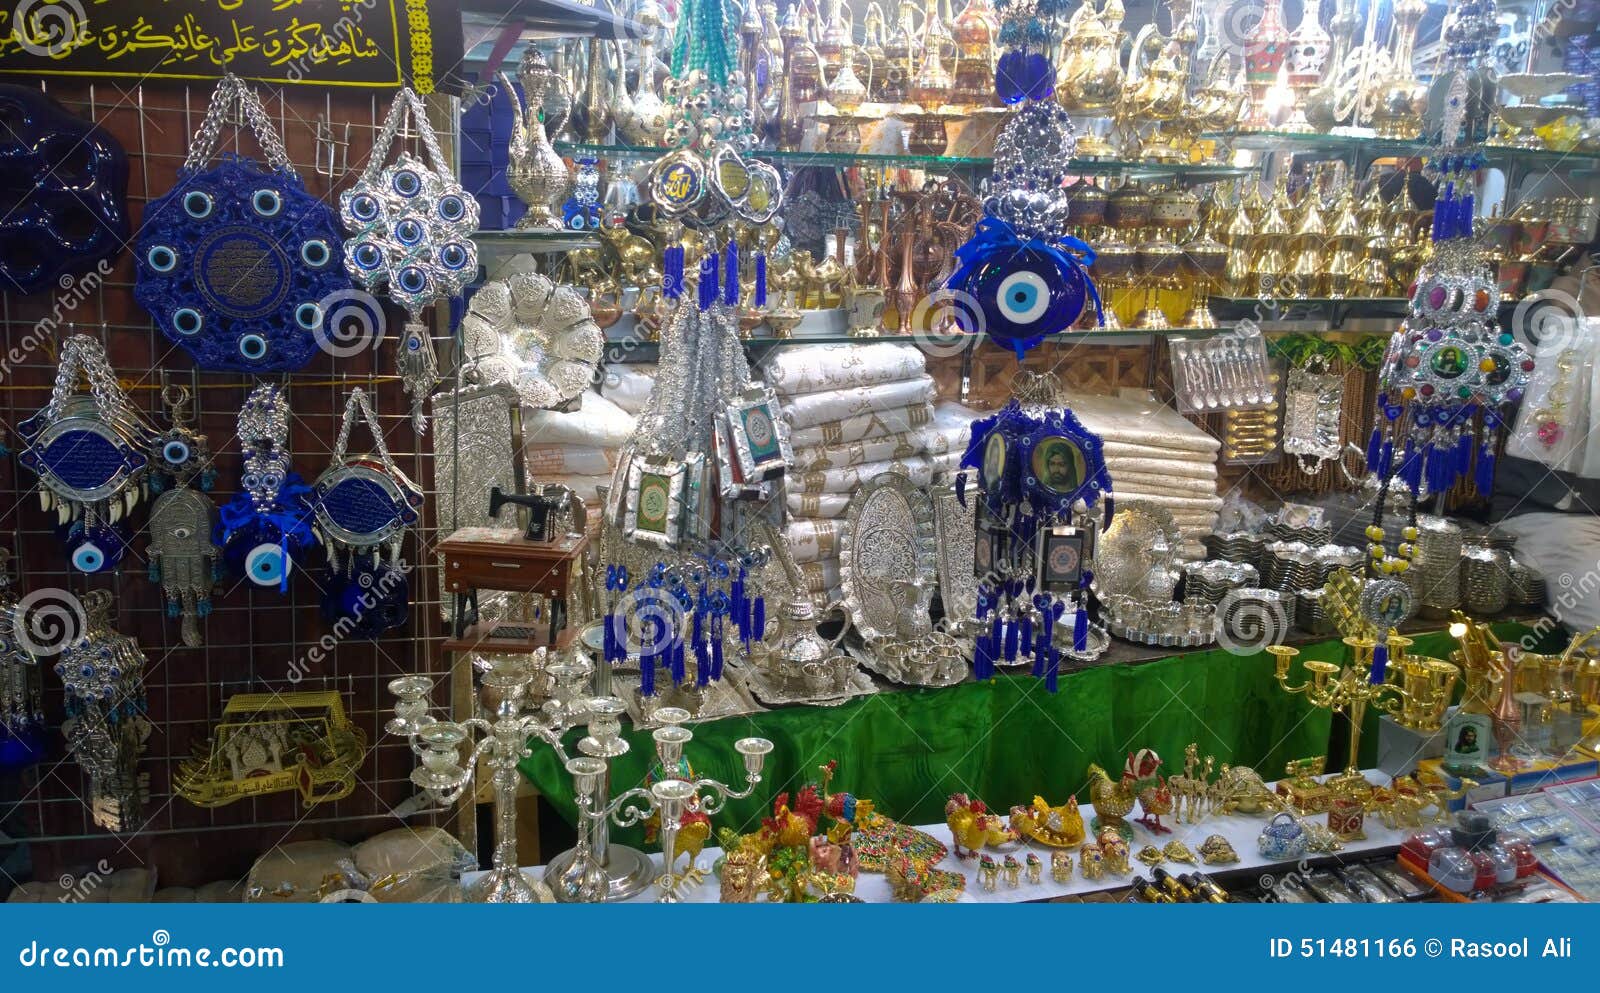 Karbala city markets stock photo. Image of meant, abbass - 51481166